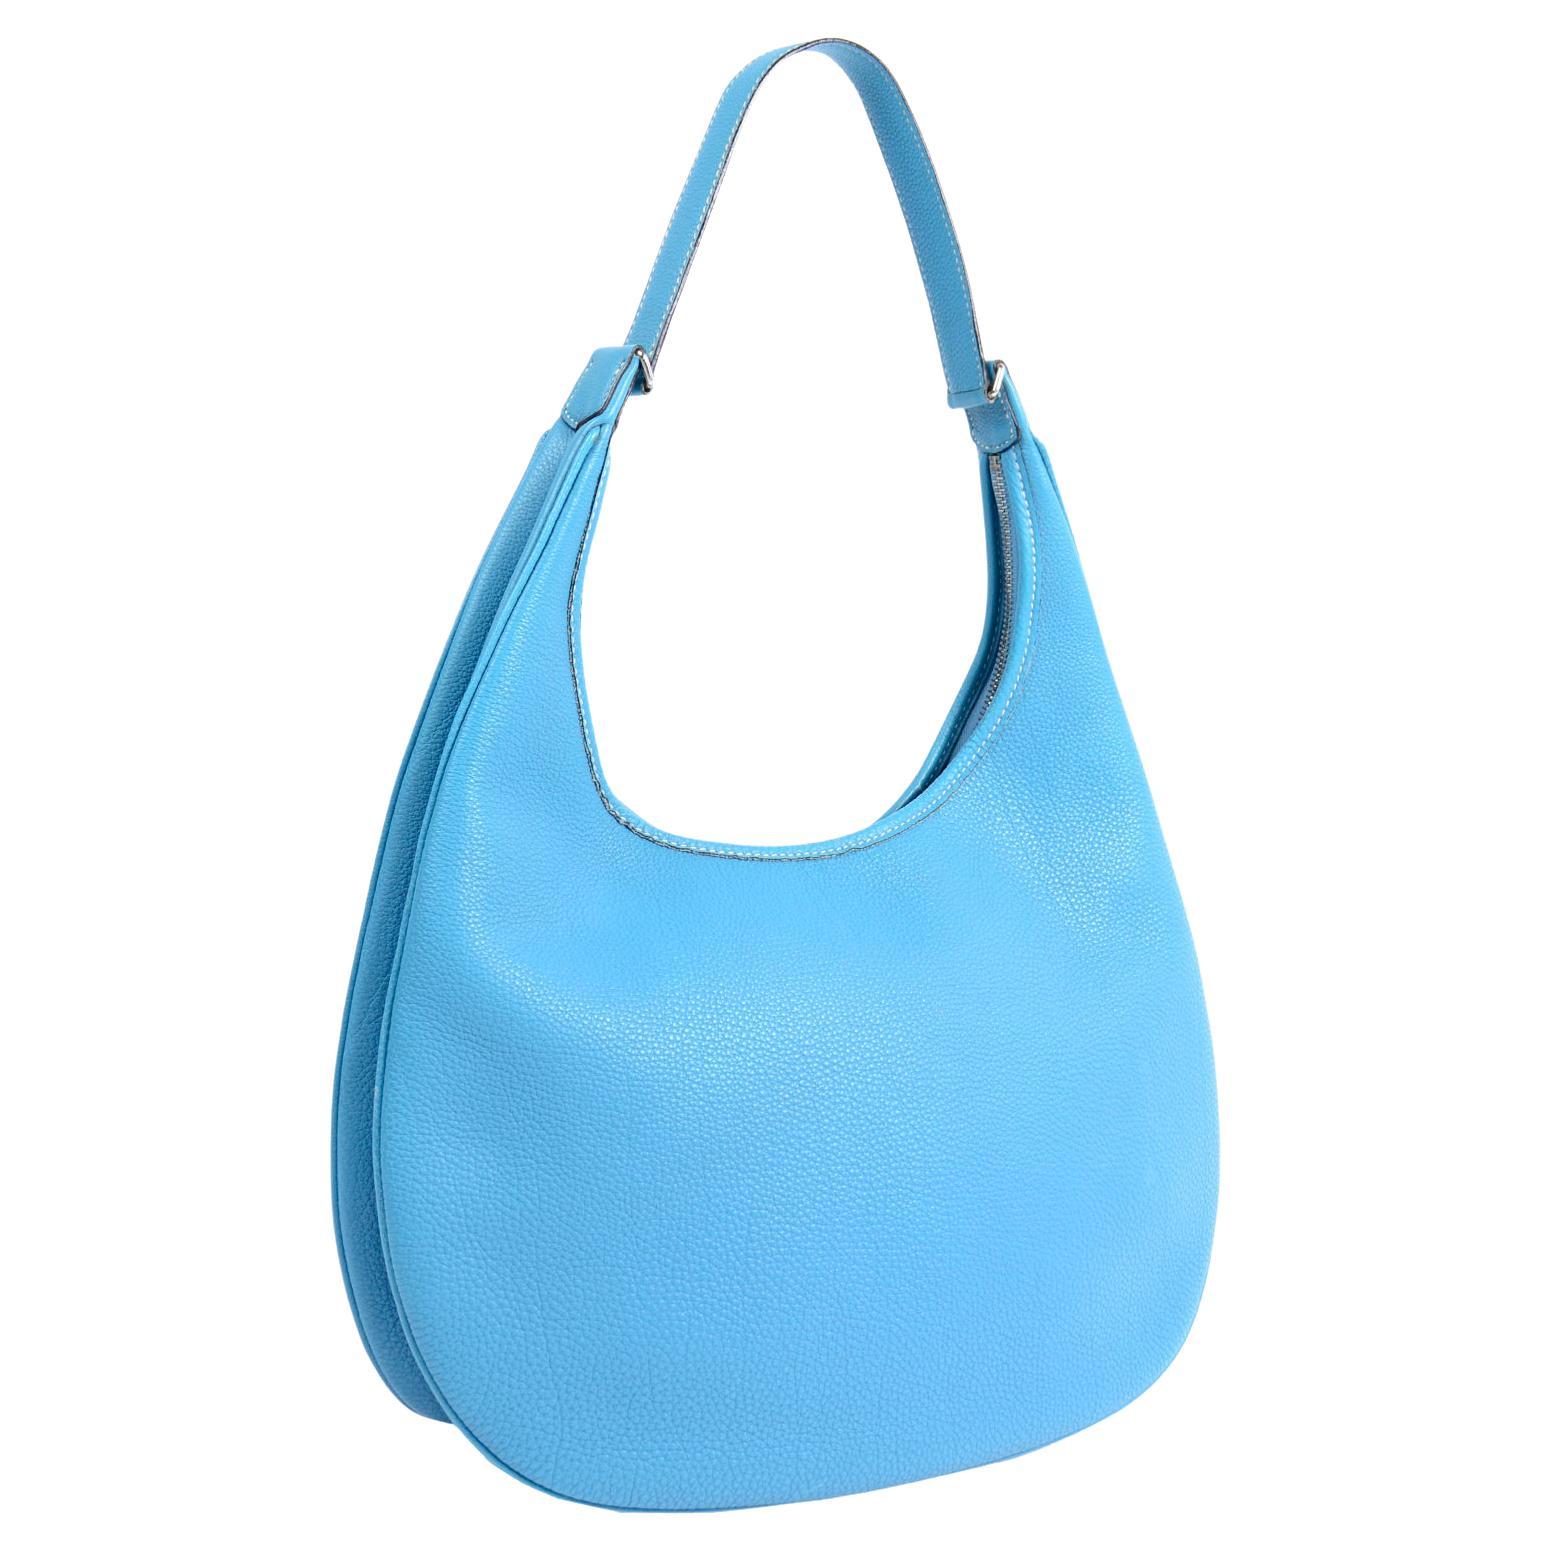 Hermes 2002 Gao Bag Blue Togo Leather Hobo Style Handbag